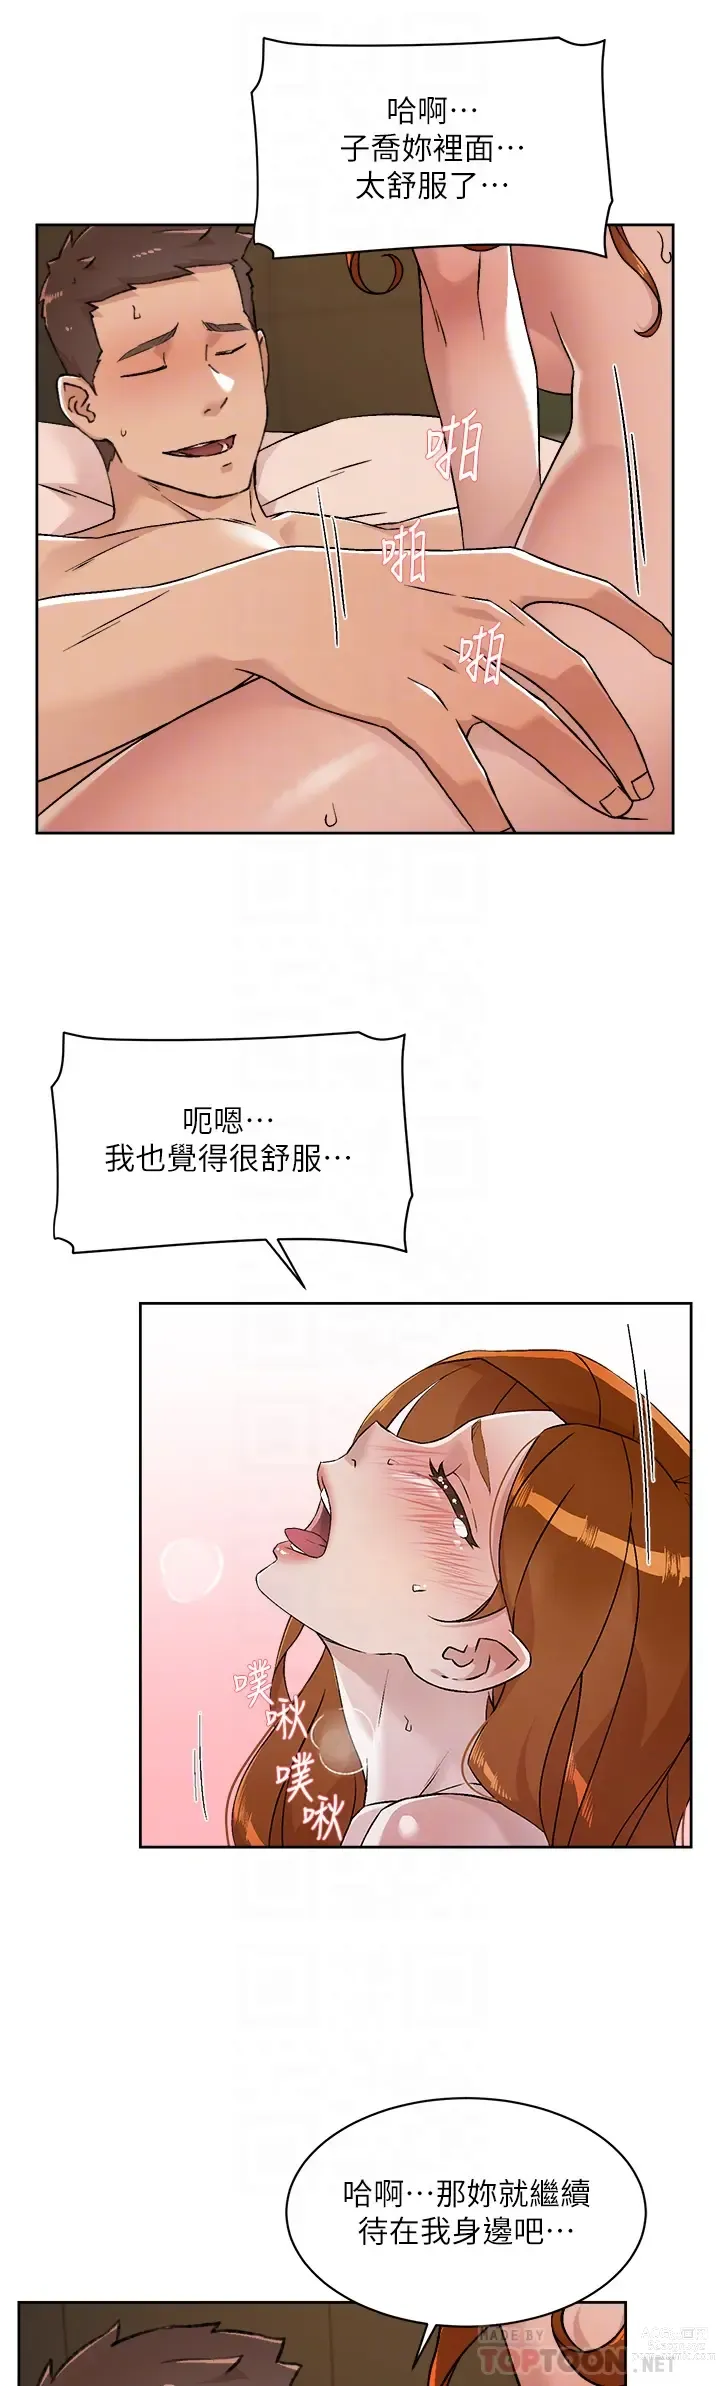 Page 21 of manga 好友的私生活